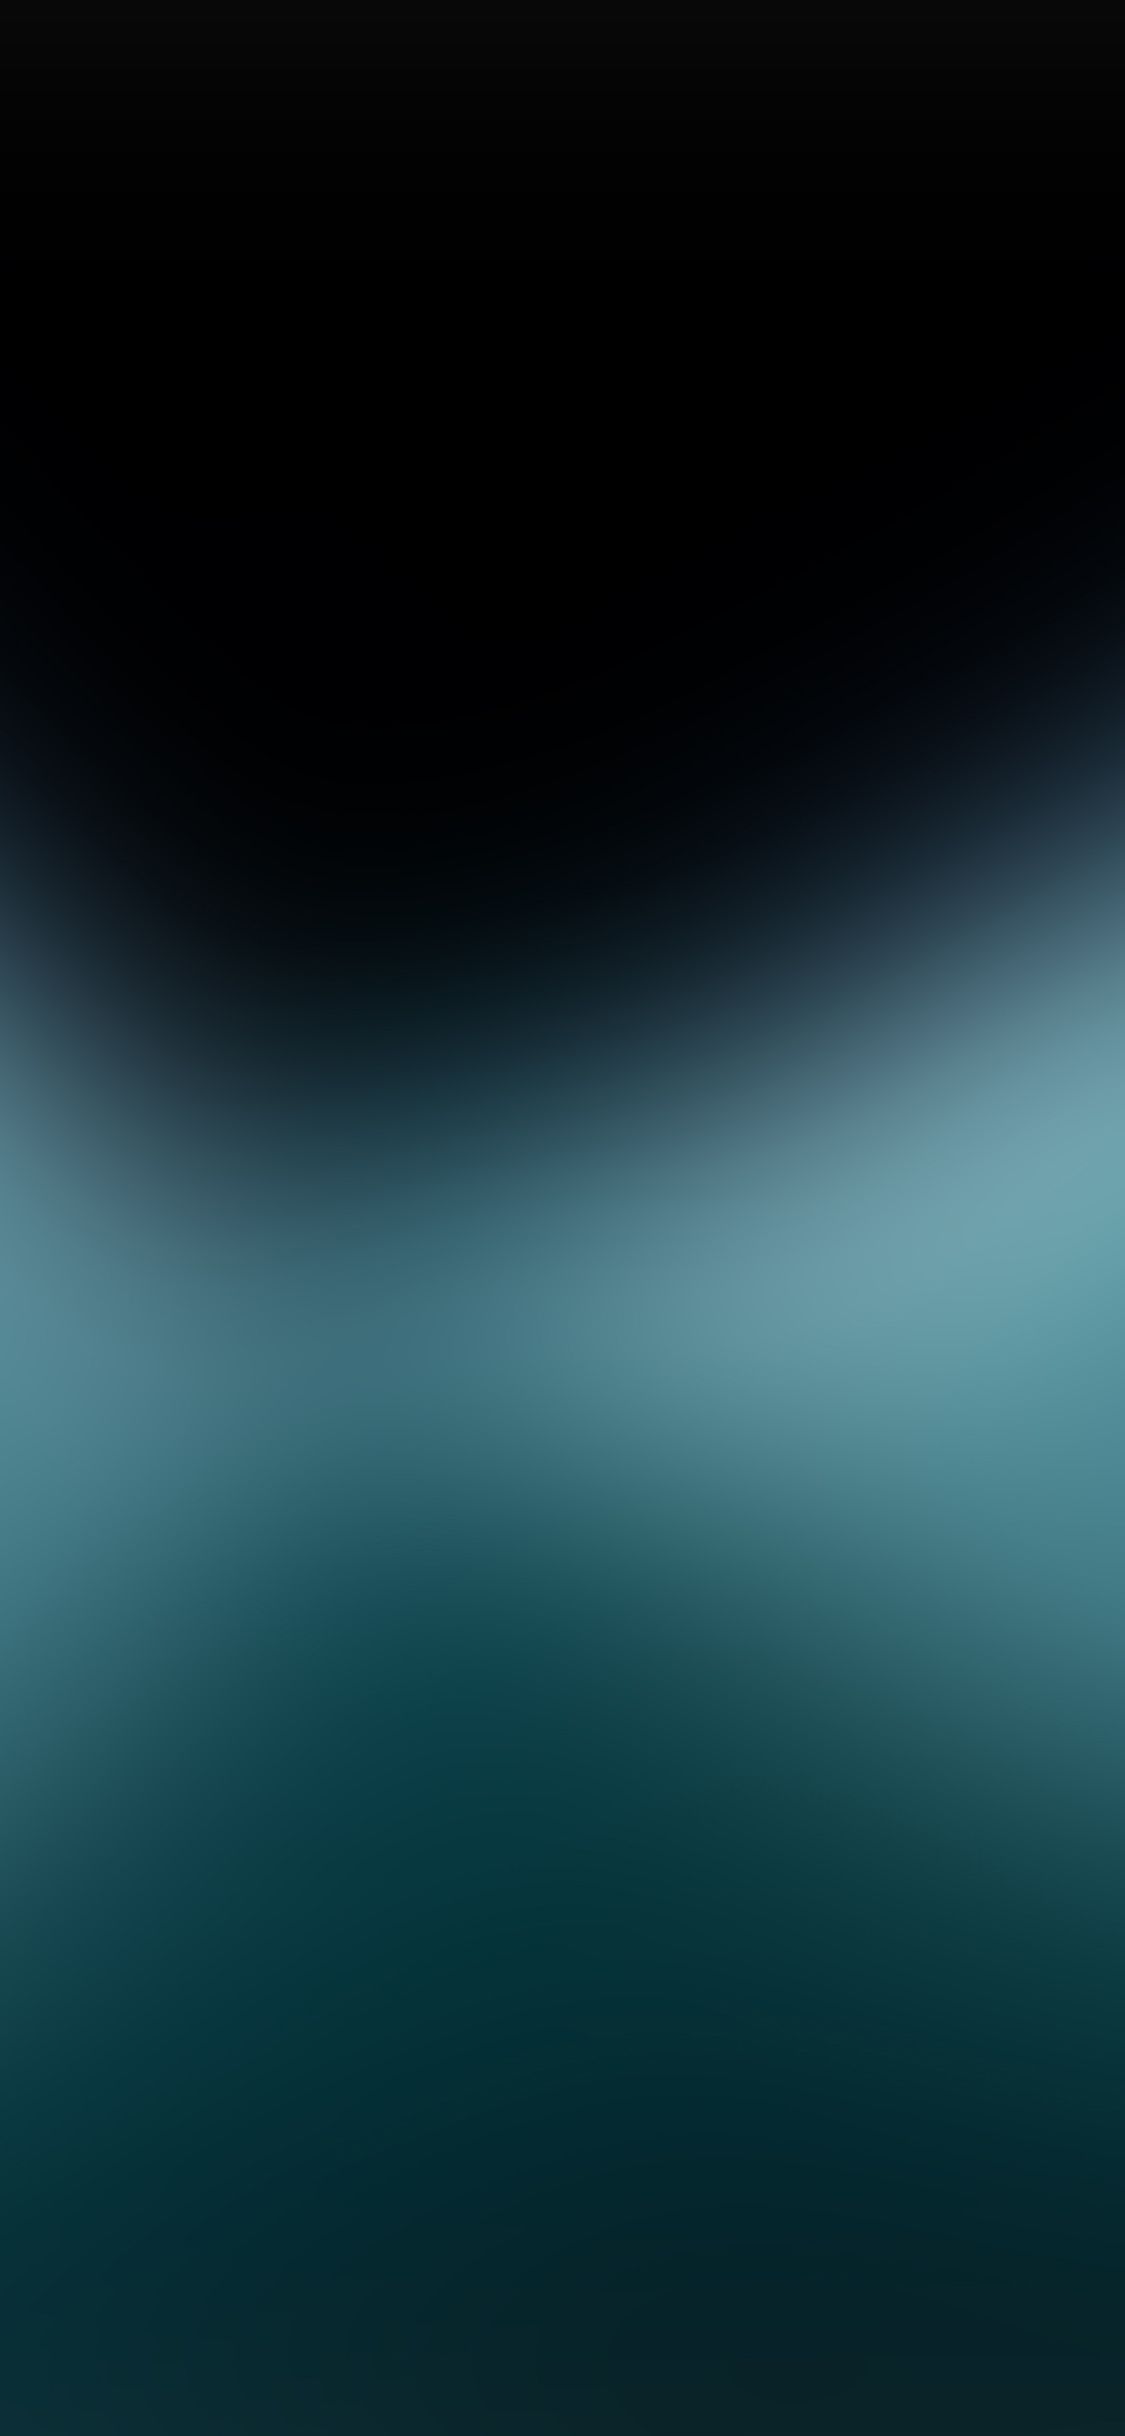 iPhone X wallpaper. tunnel blue gradation blur